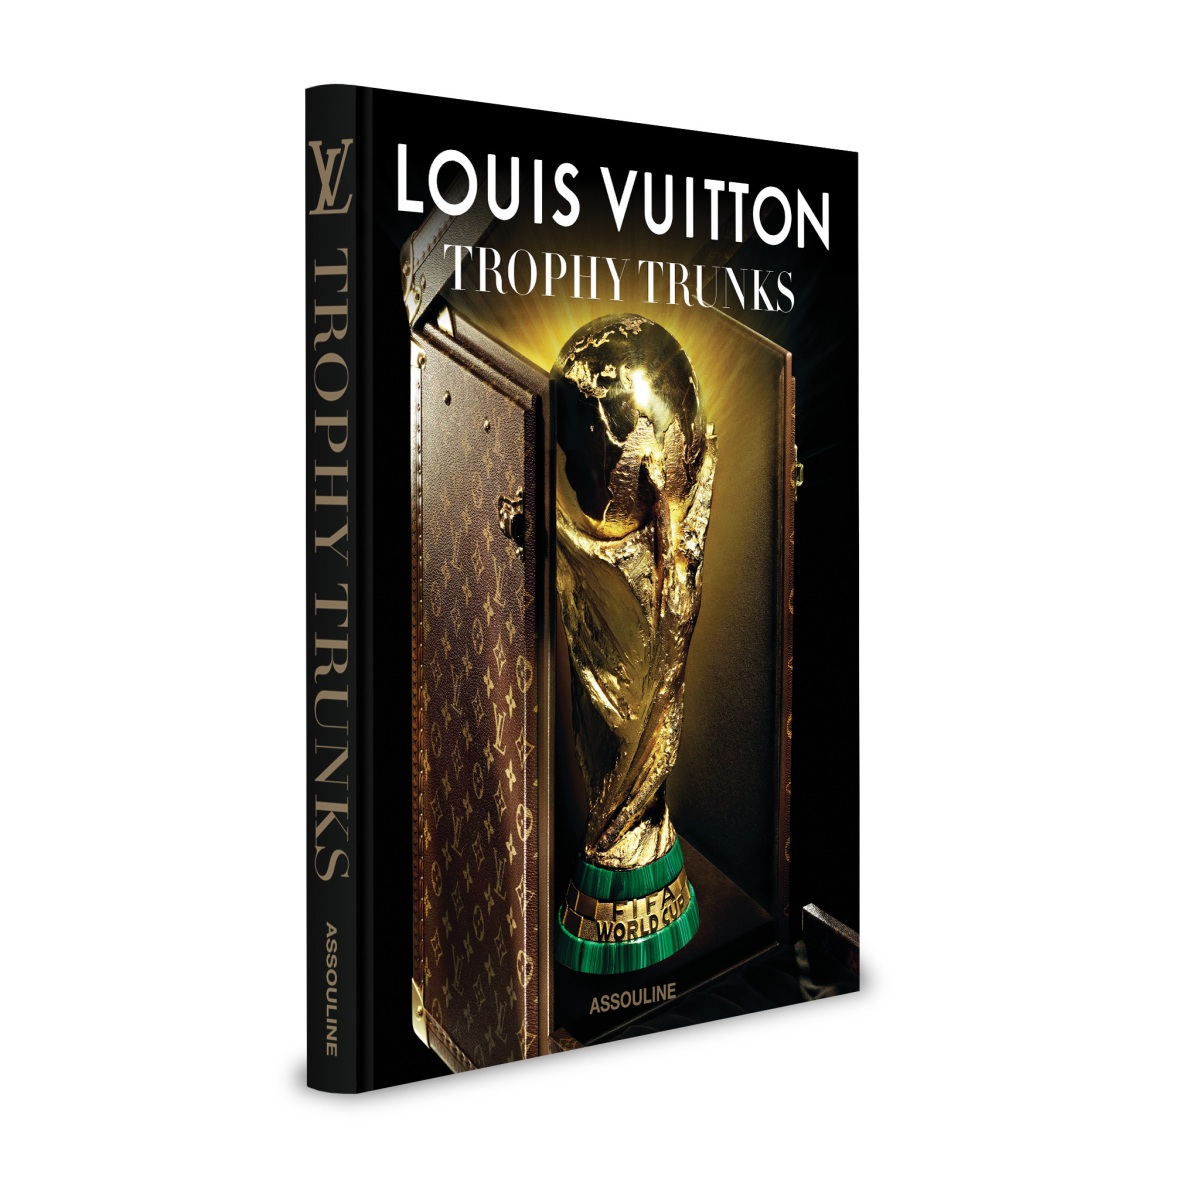 Louis Vuitton Trophy Trunks by Assouline – ART IS ALIVE